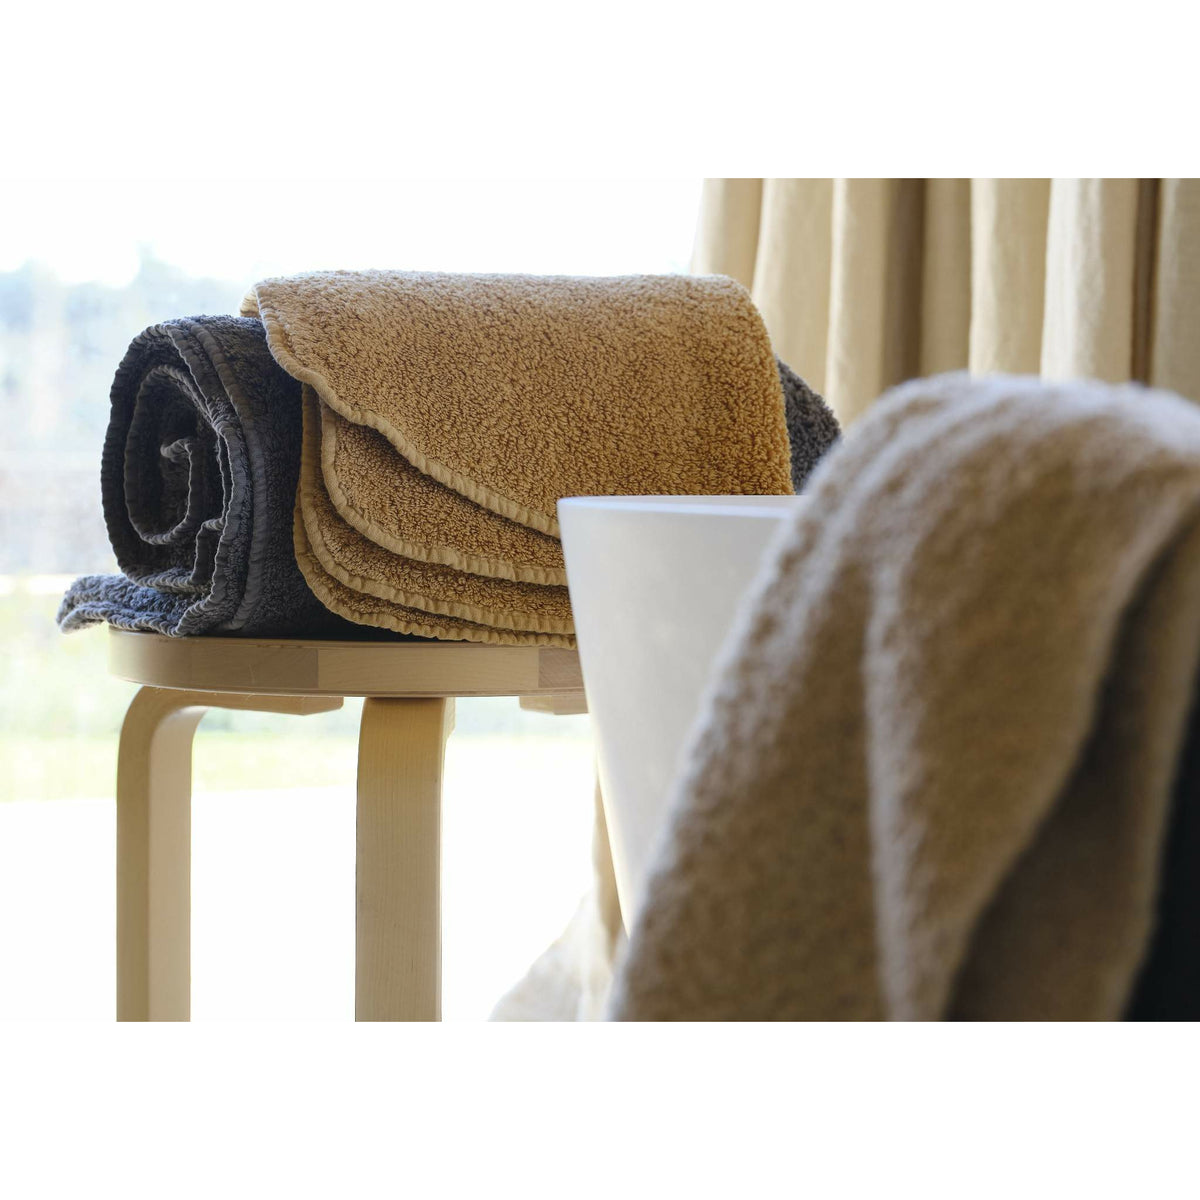 Under The Canopy Plush Organic Towel - Blush Blush / Bath Sheet